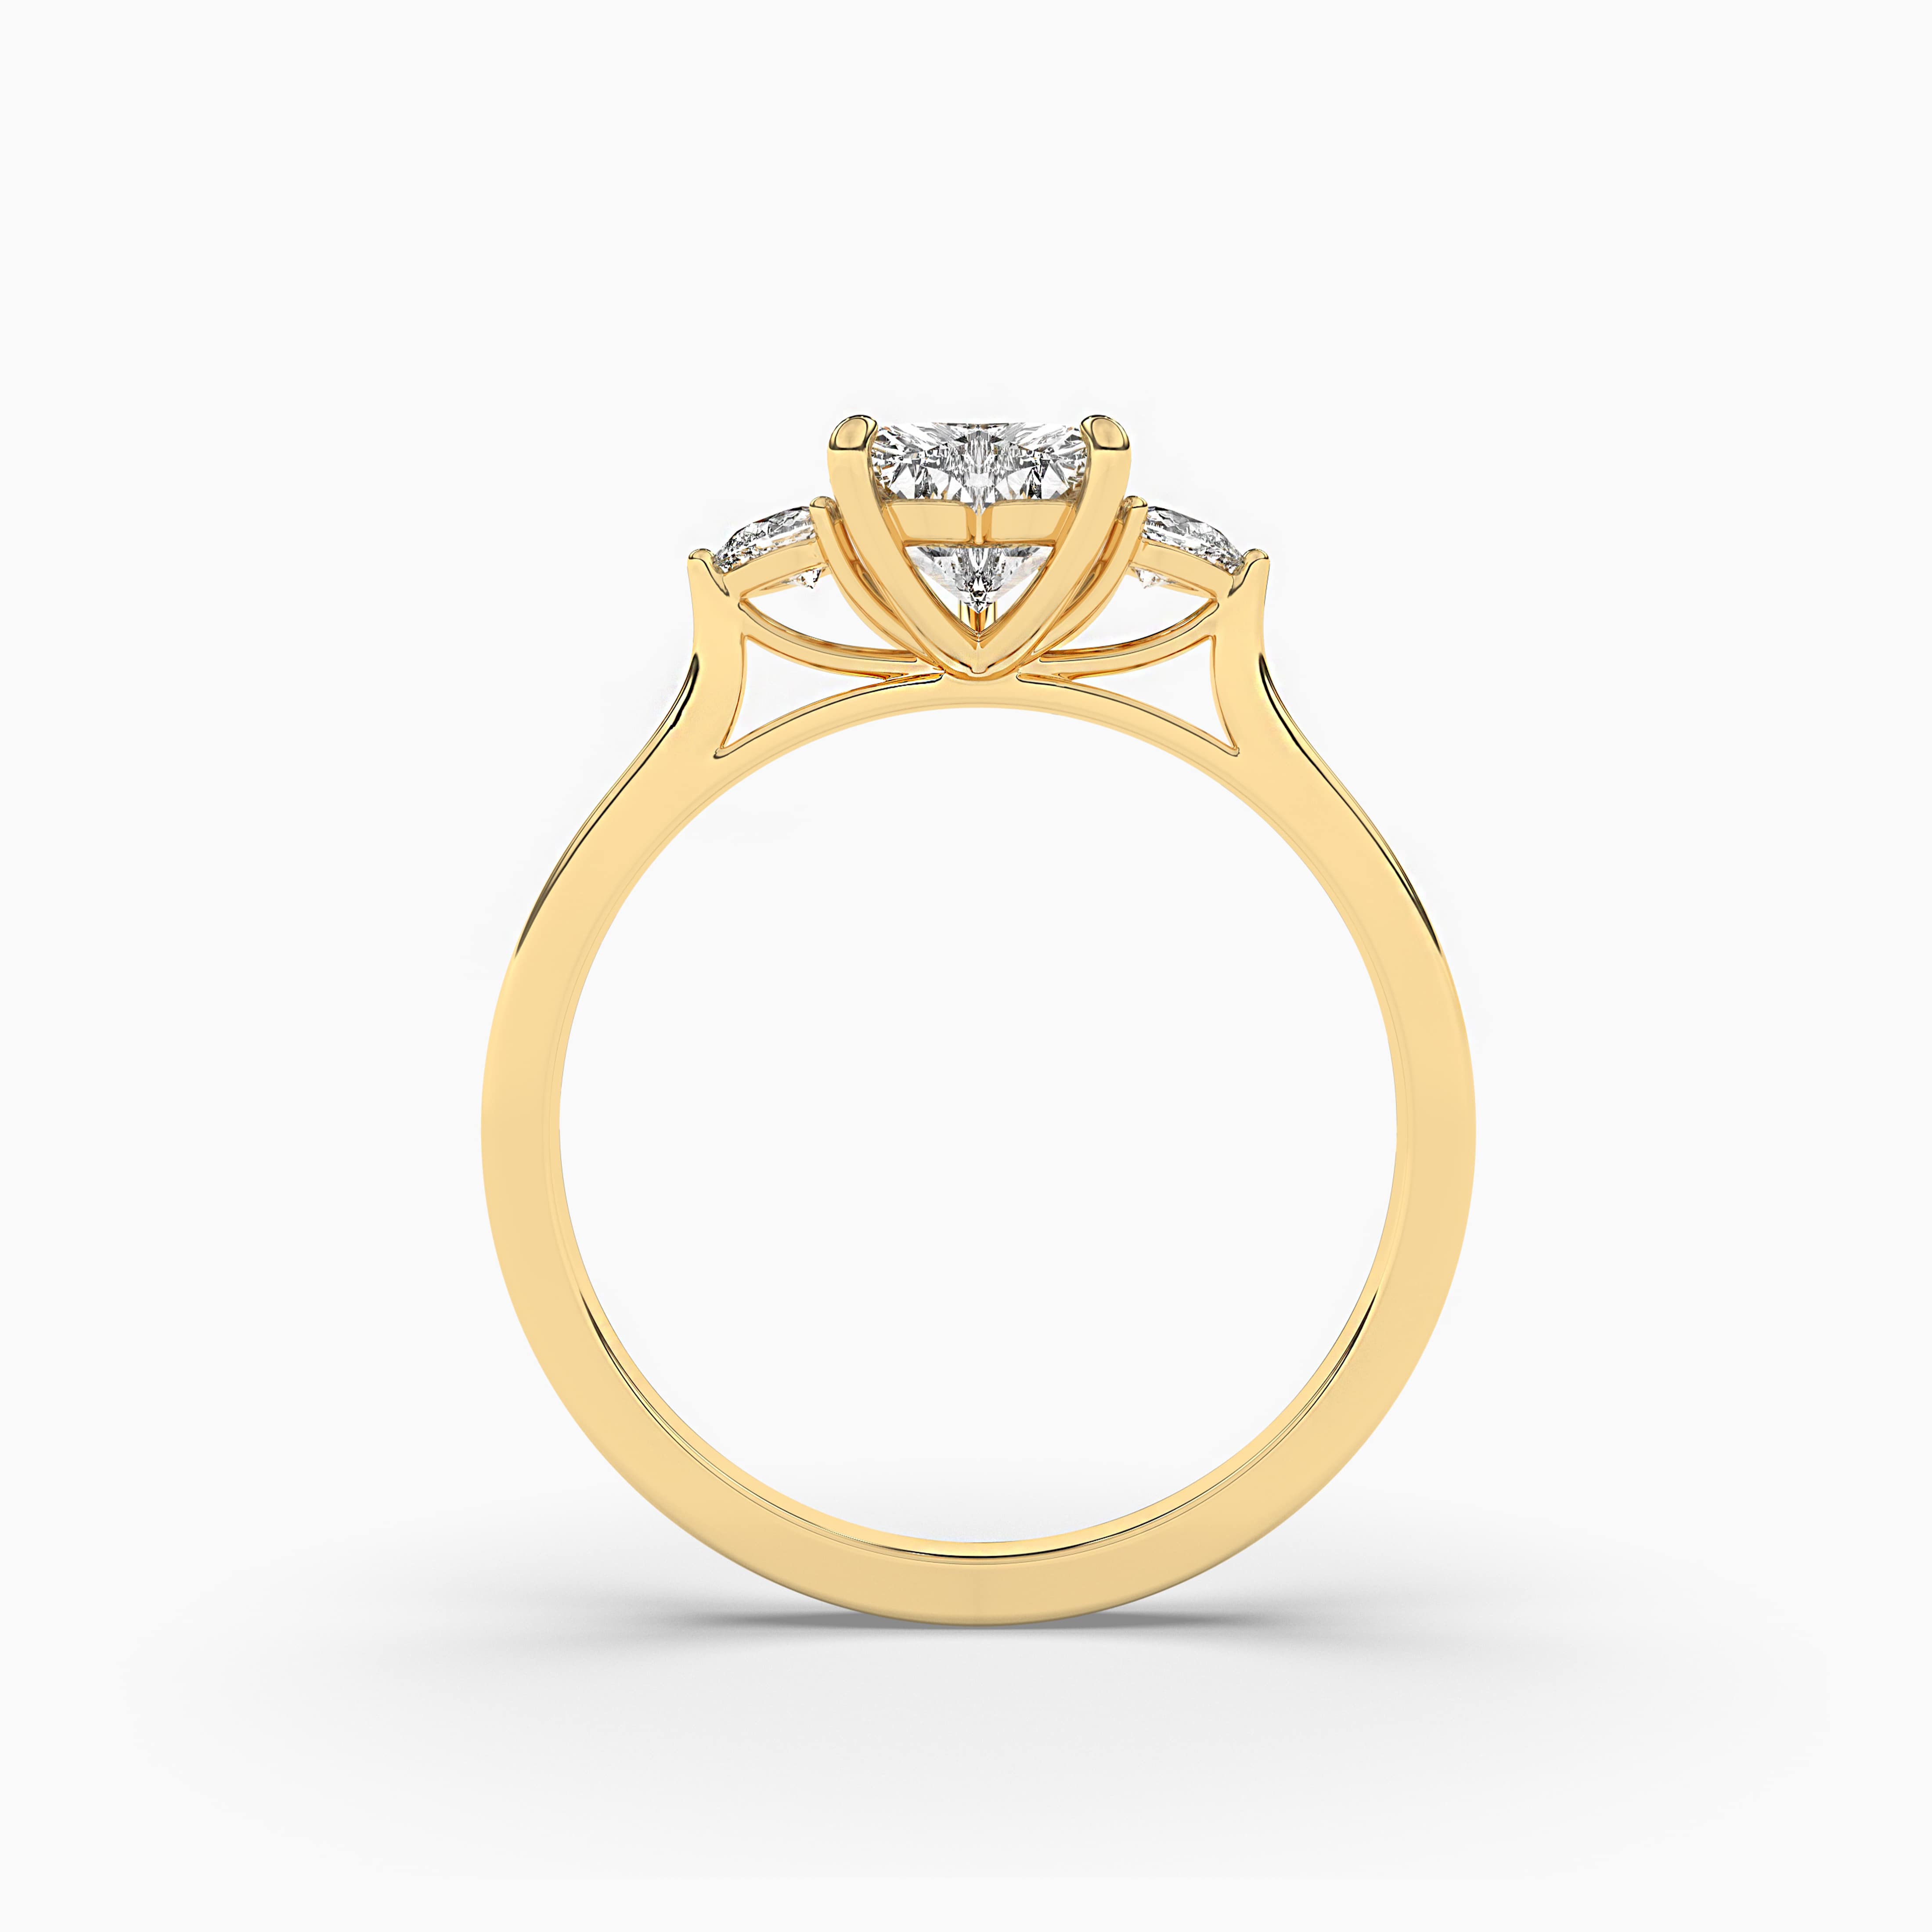 Side Stone Diamond Engagement Ring